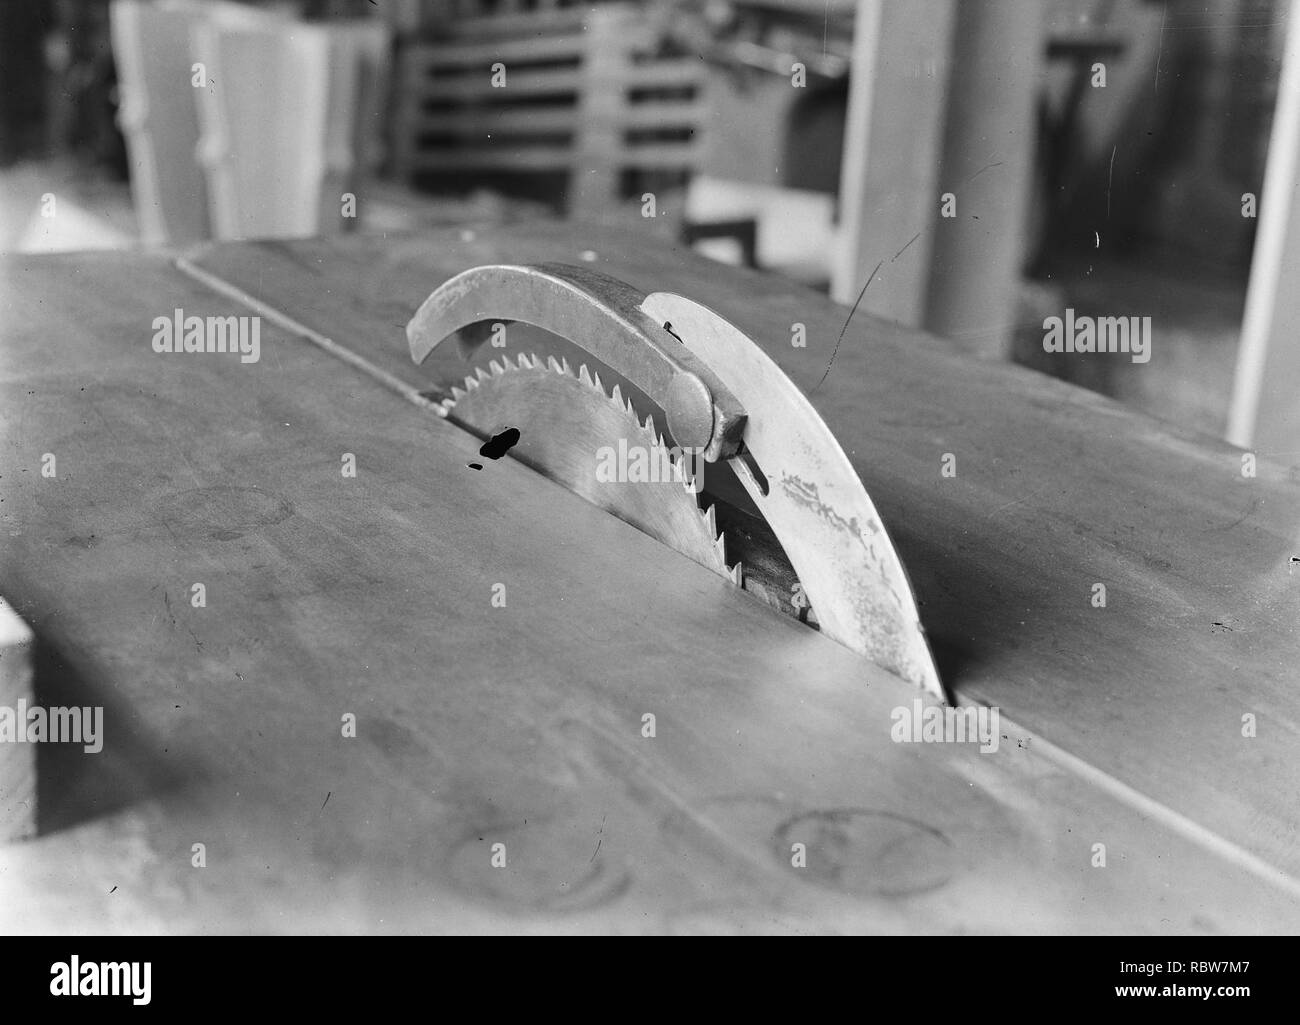 Smash Skalk stok 9x12 Spouwmes voor cirkelzaag, Bestanddeelnr 256-0409 Stock Photo - Alamy